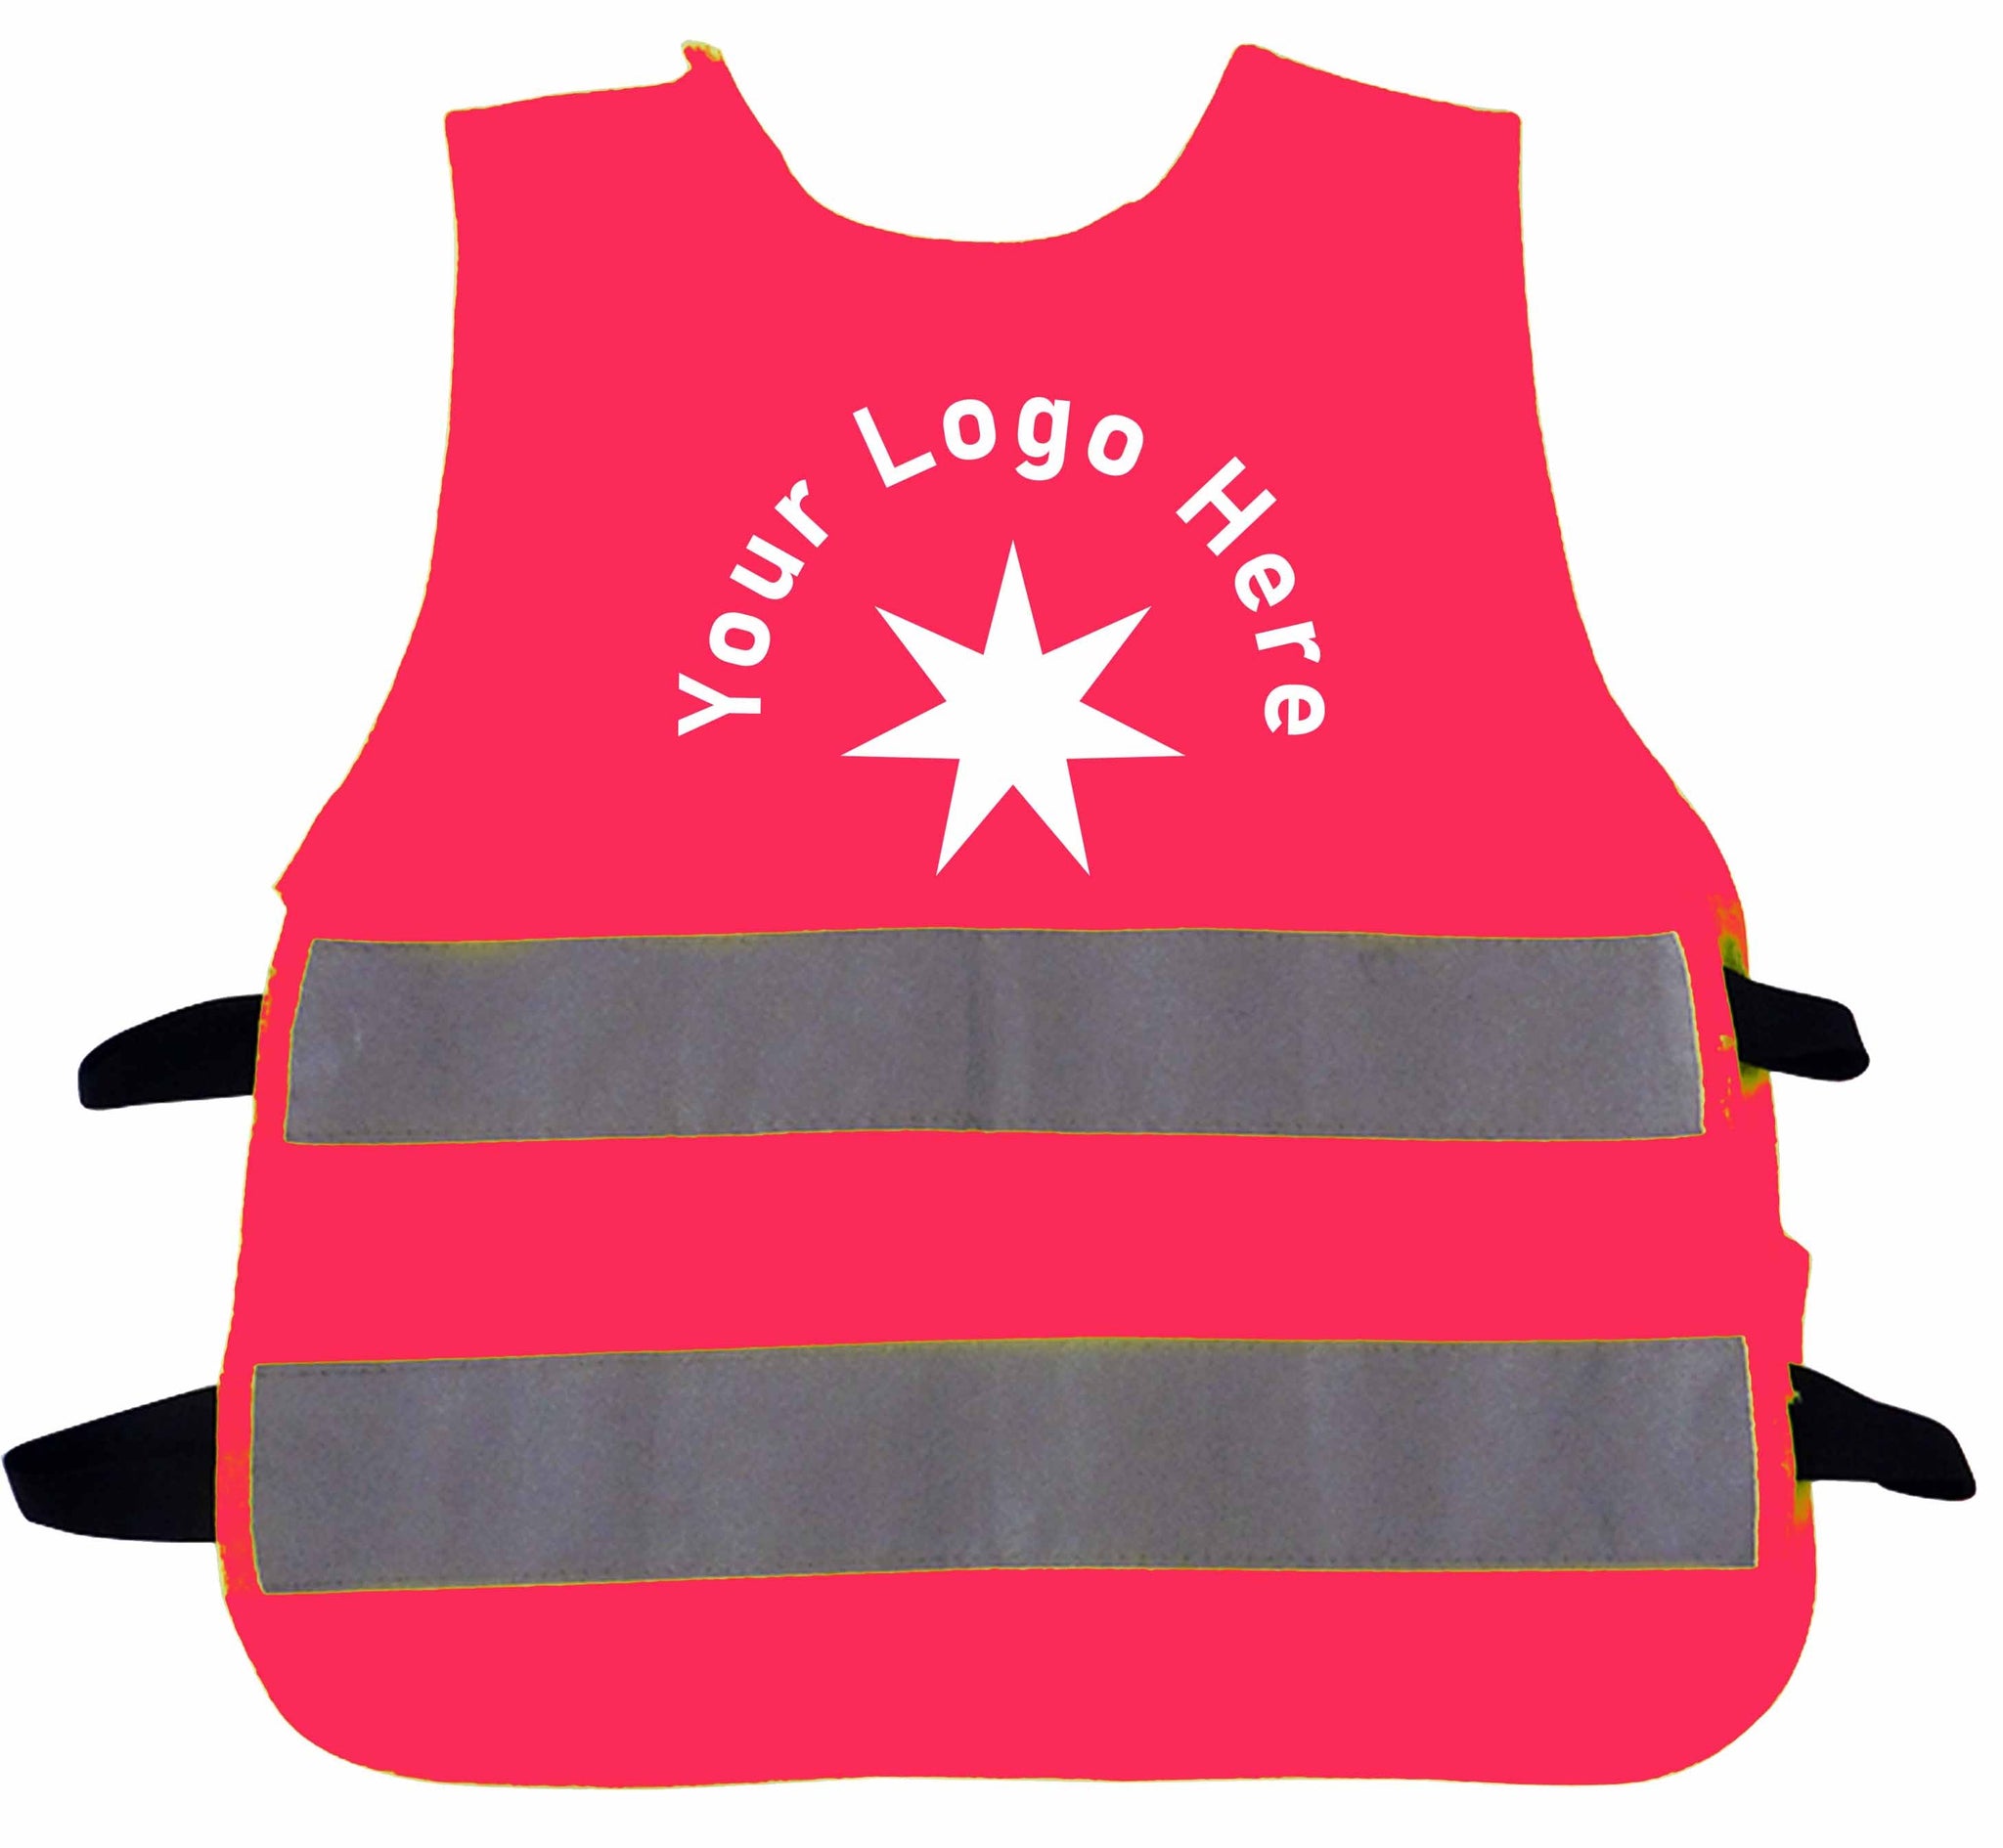 Safety Vest - Bib Style - Printed